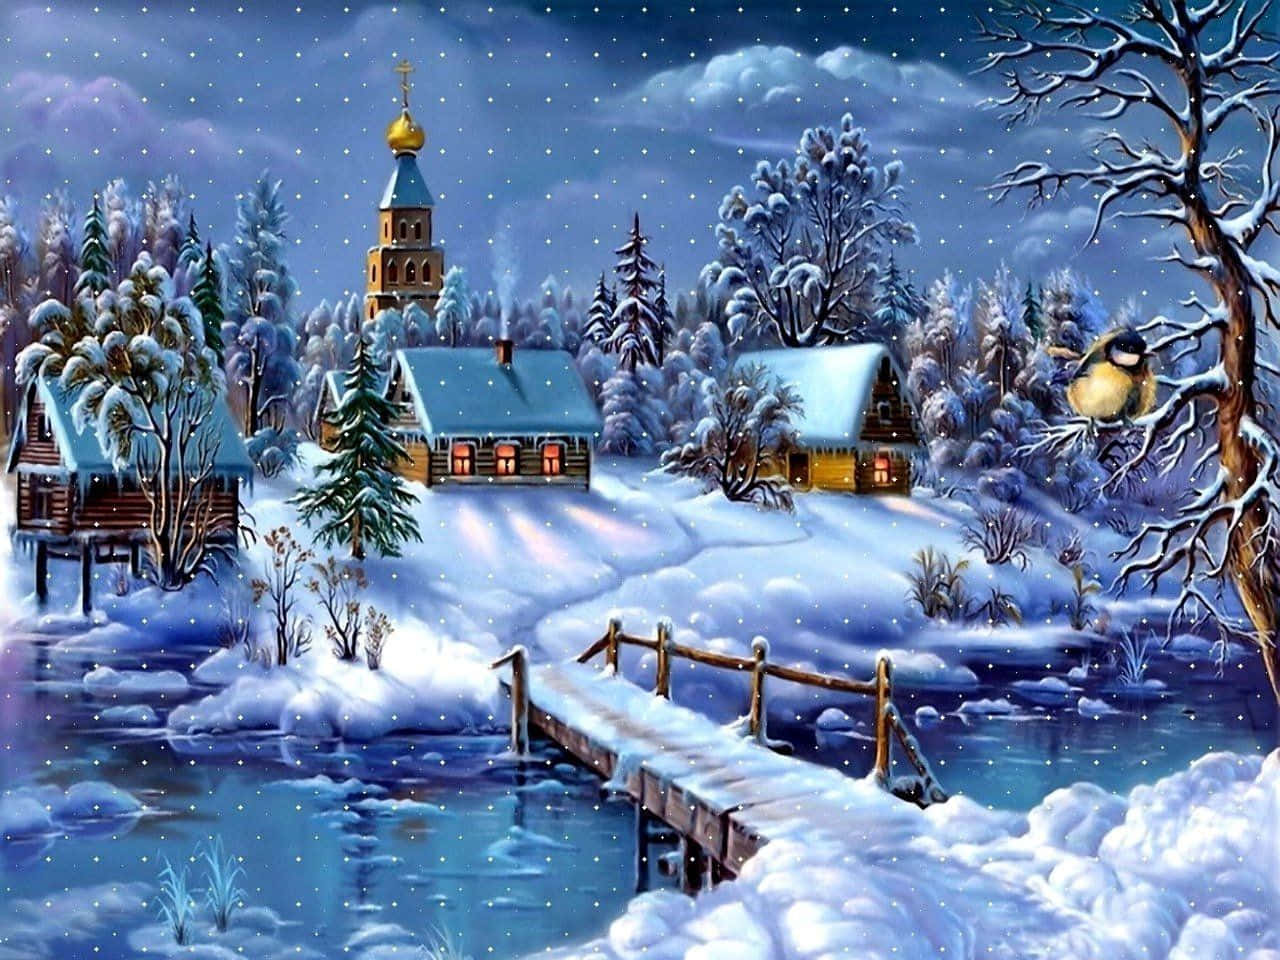 Picturesque Snowy Village Scene Wallpaper